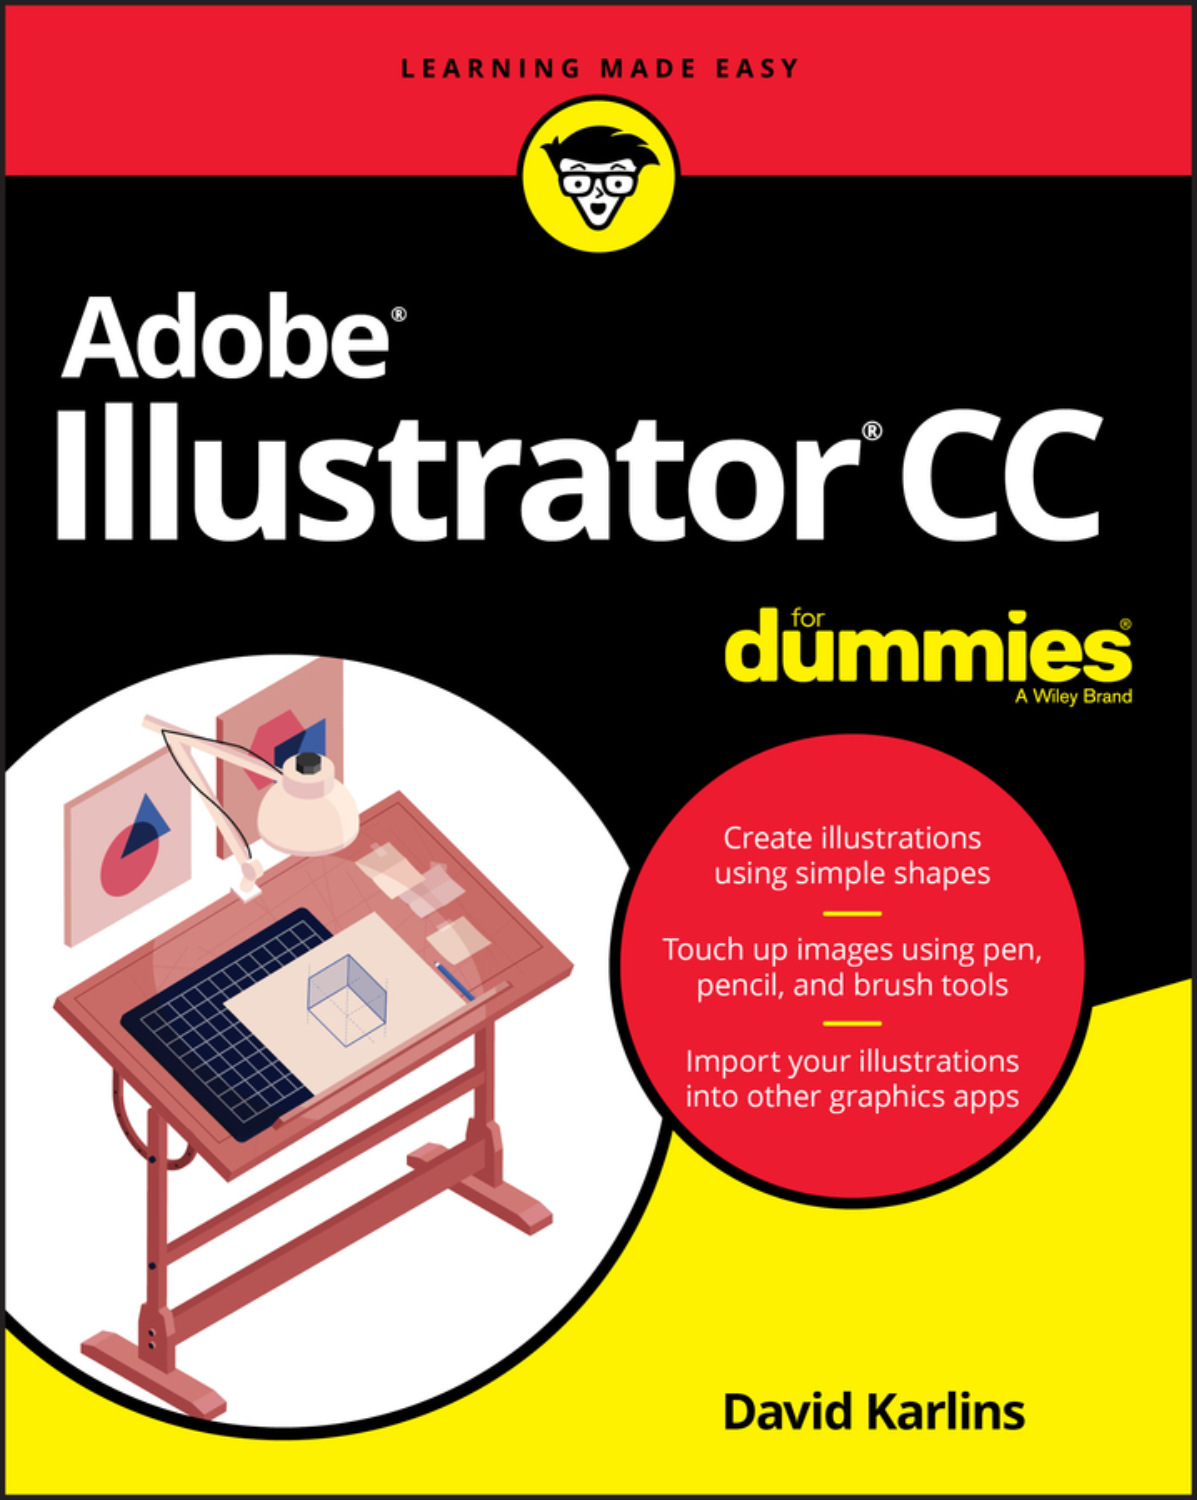 adobe illustrator cc for dummies pdf download